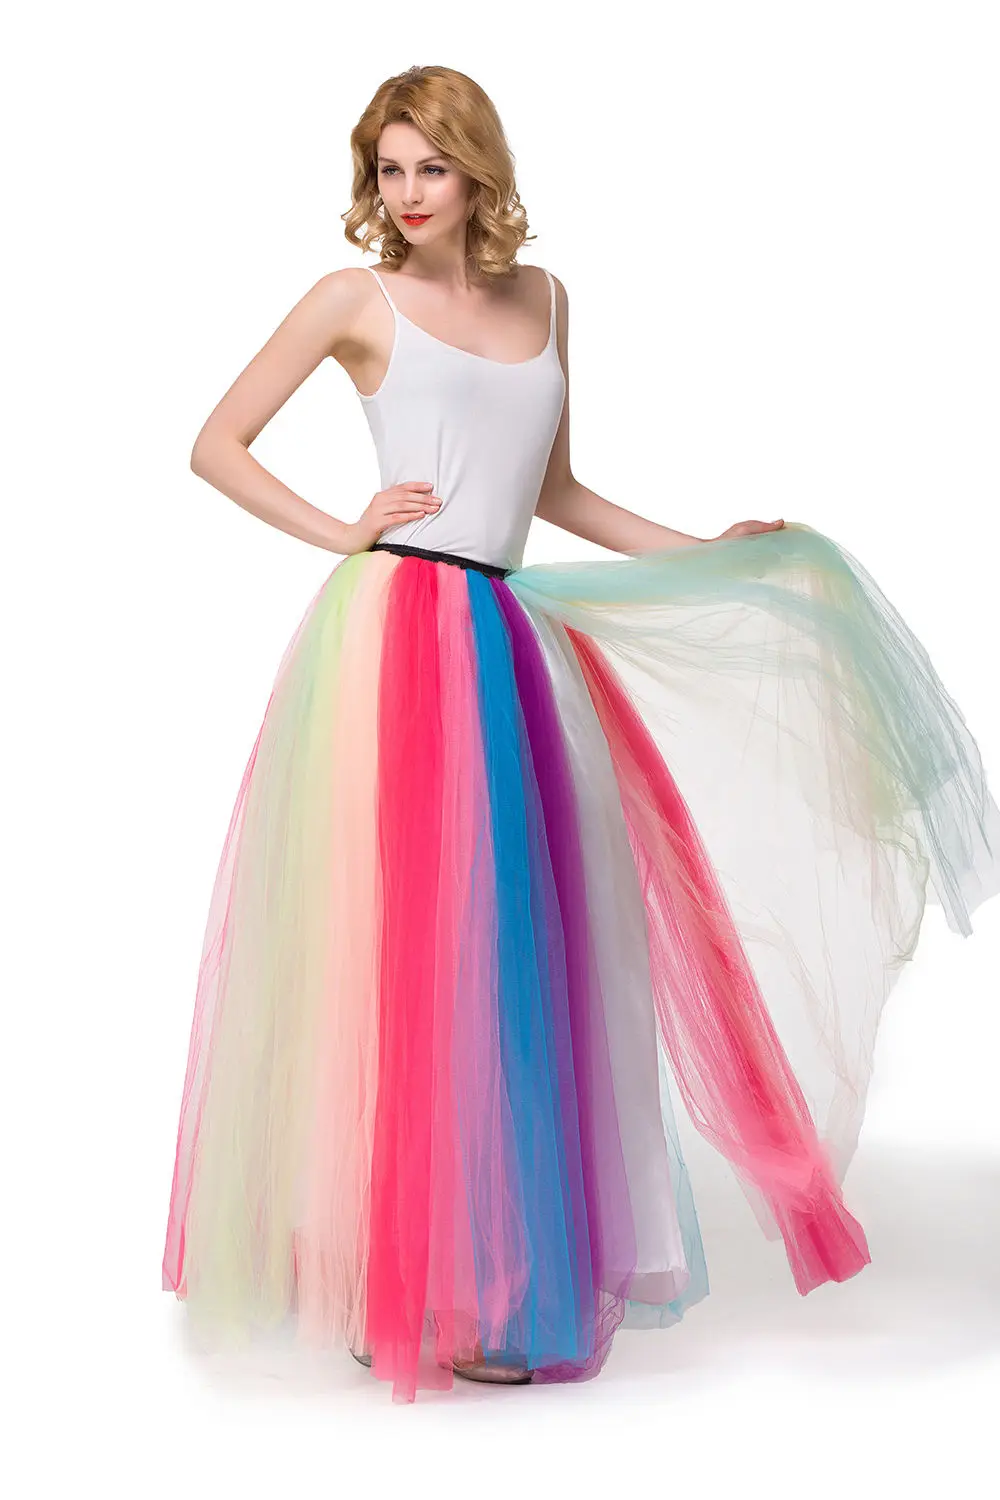 Tulle Hoopless Long Petticoat Wedding Dress Crinoline Ball Gown Underskirt Fluffy Skirt Woman Tutu Bridal Accessories 2020